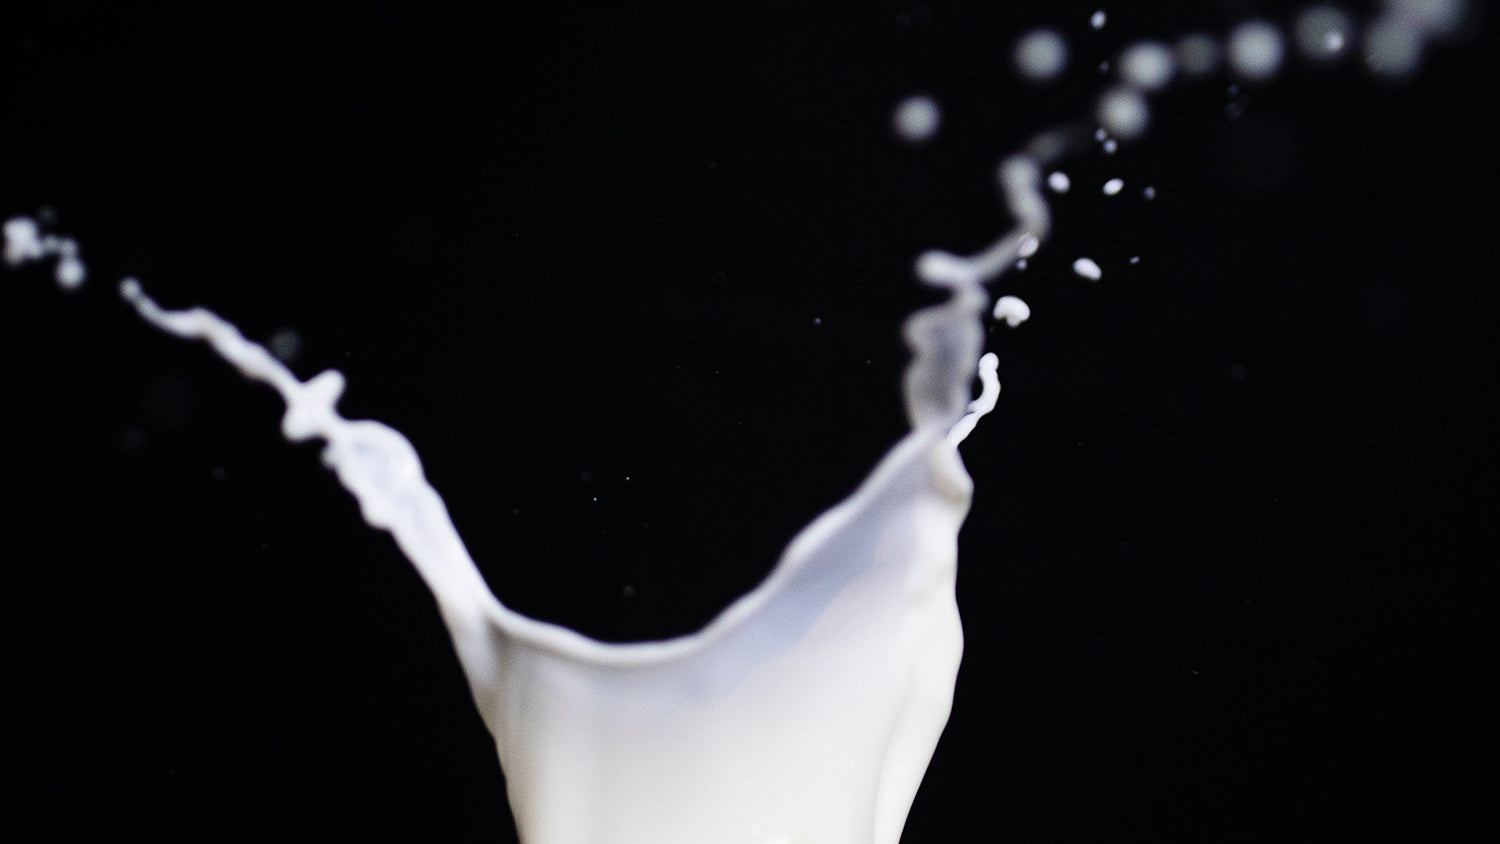 Milk splashing against a black background.